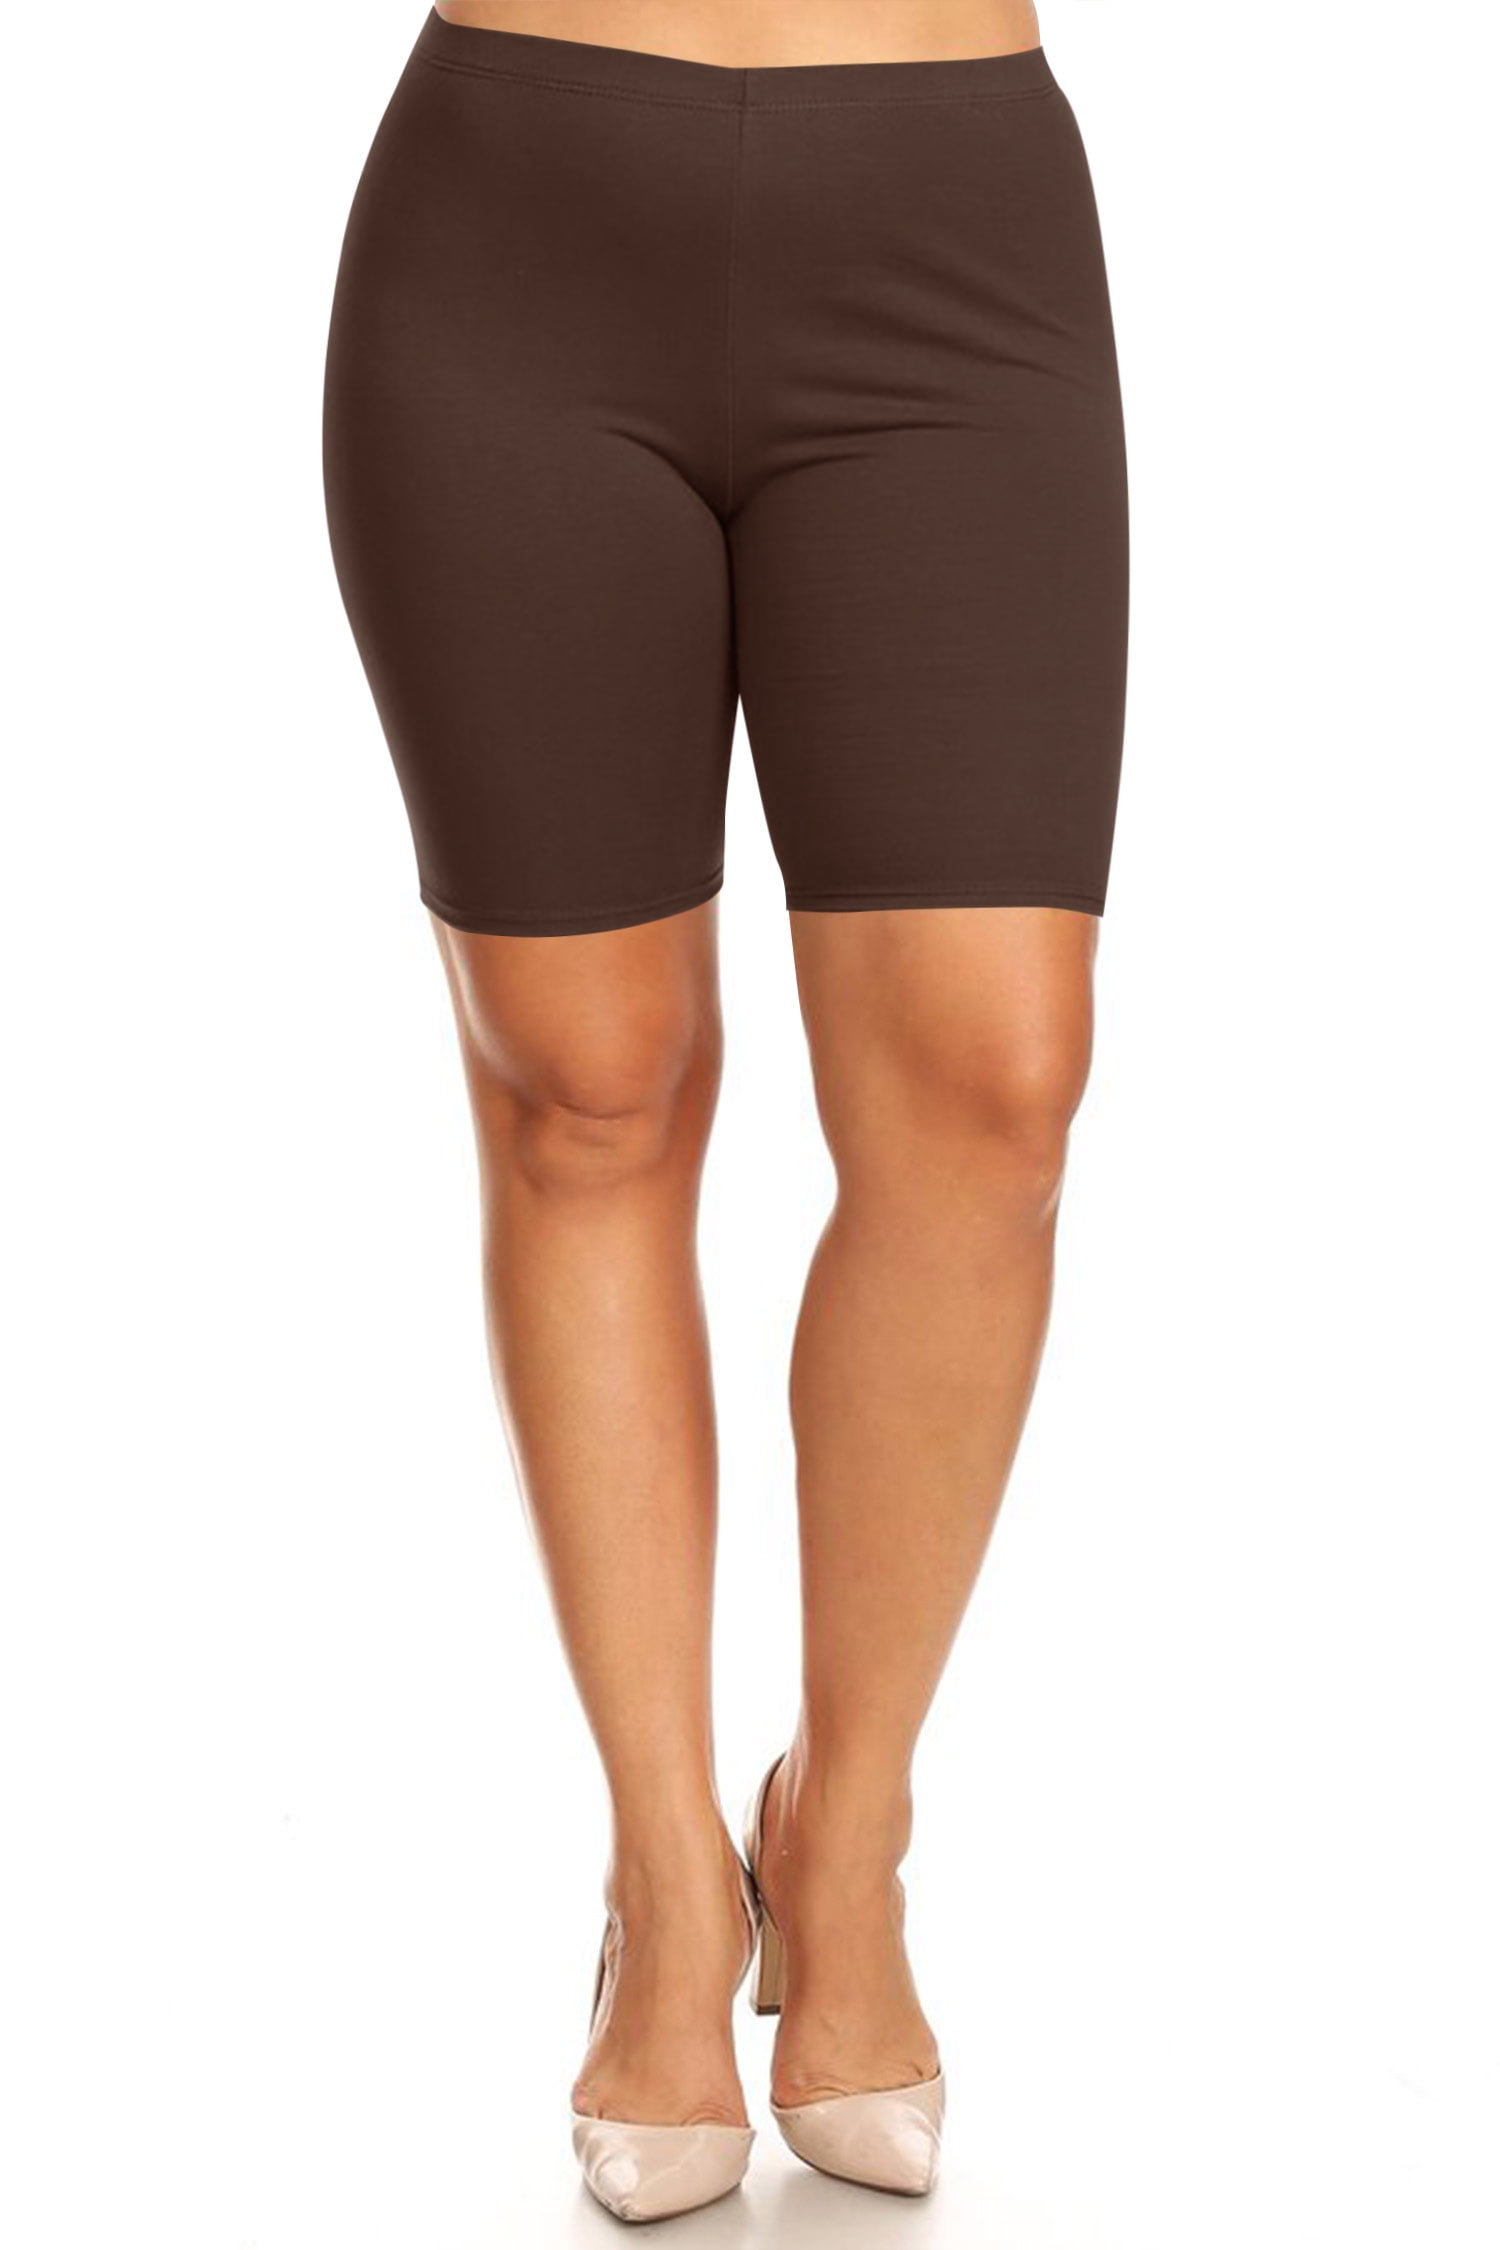 Women's Plus Size Casual Comfy Workout Yoga Basic Solid Biker Shorts Pants  